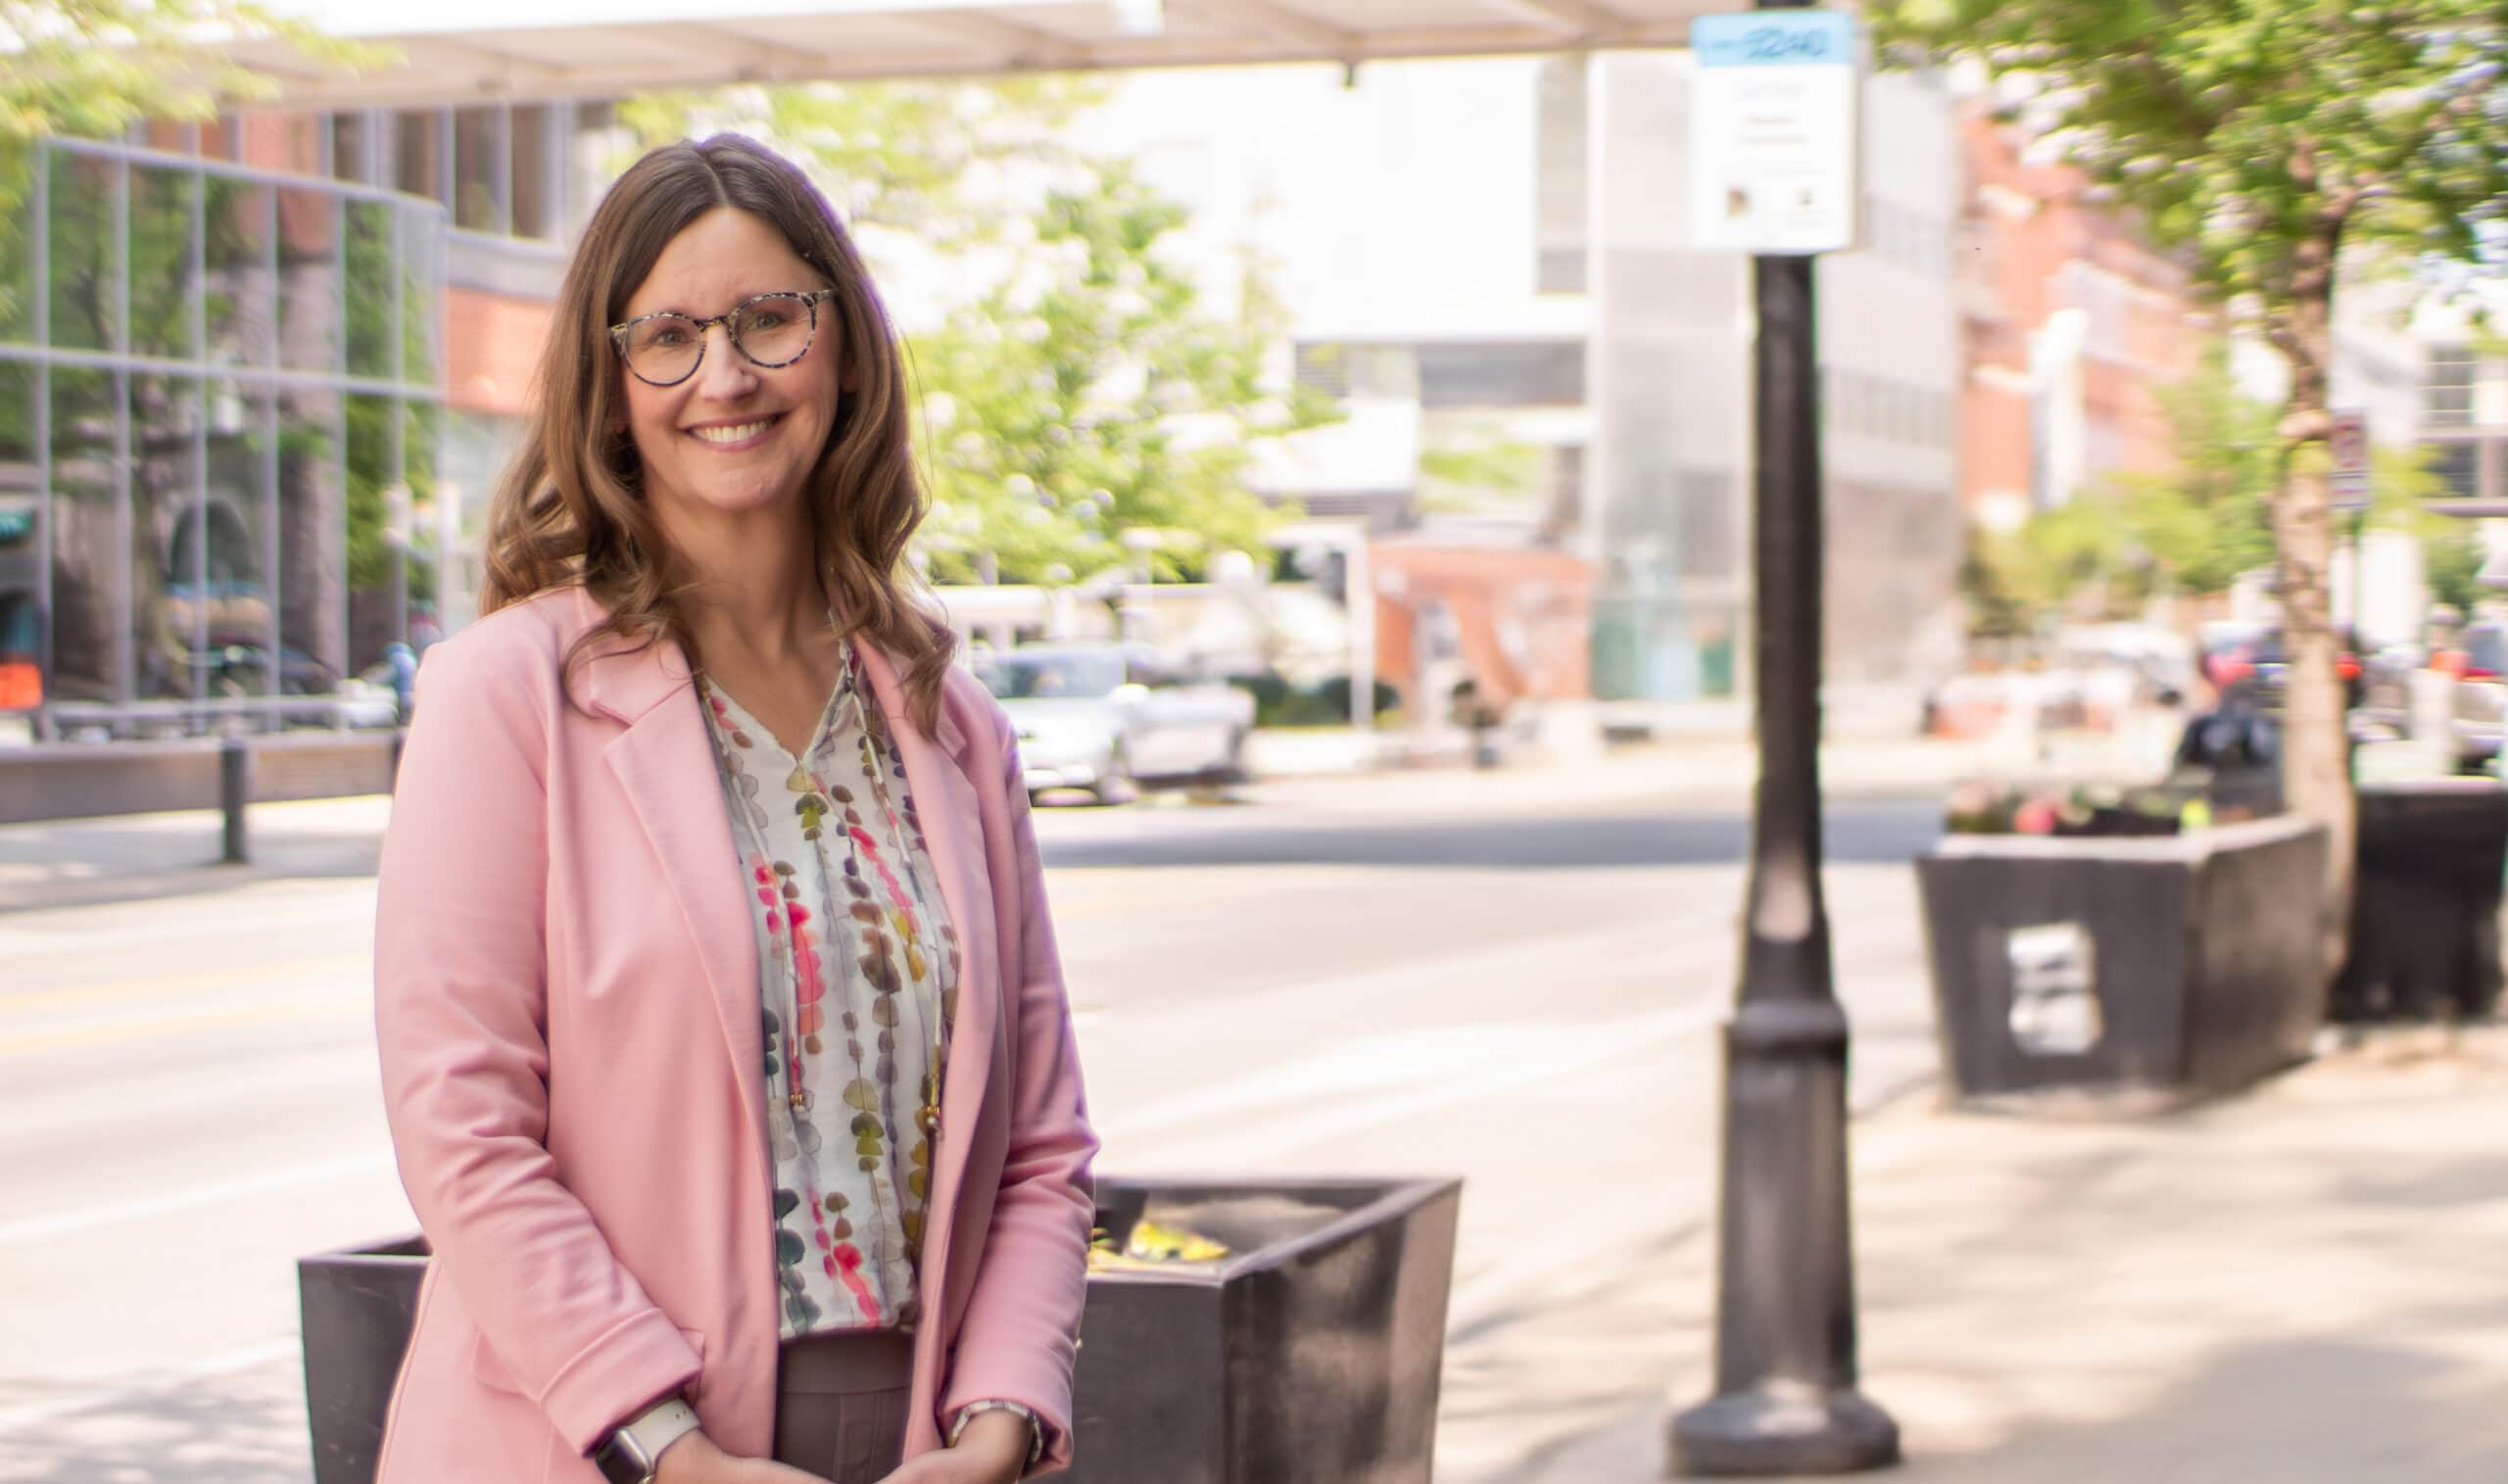 Karla Twedt-Ball smiles on a city sidewalk wearing a pink blazer.